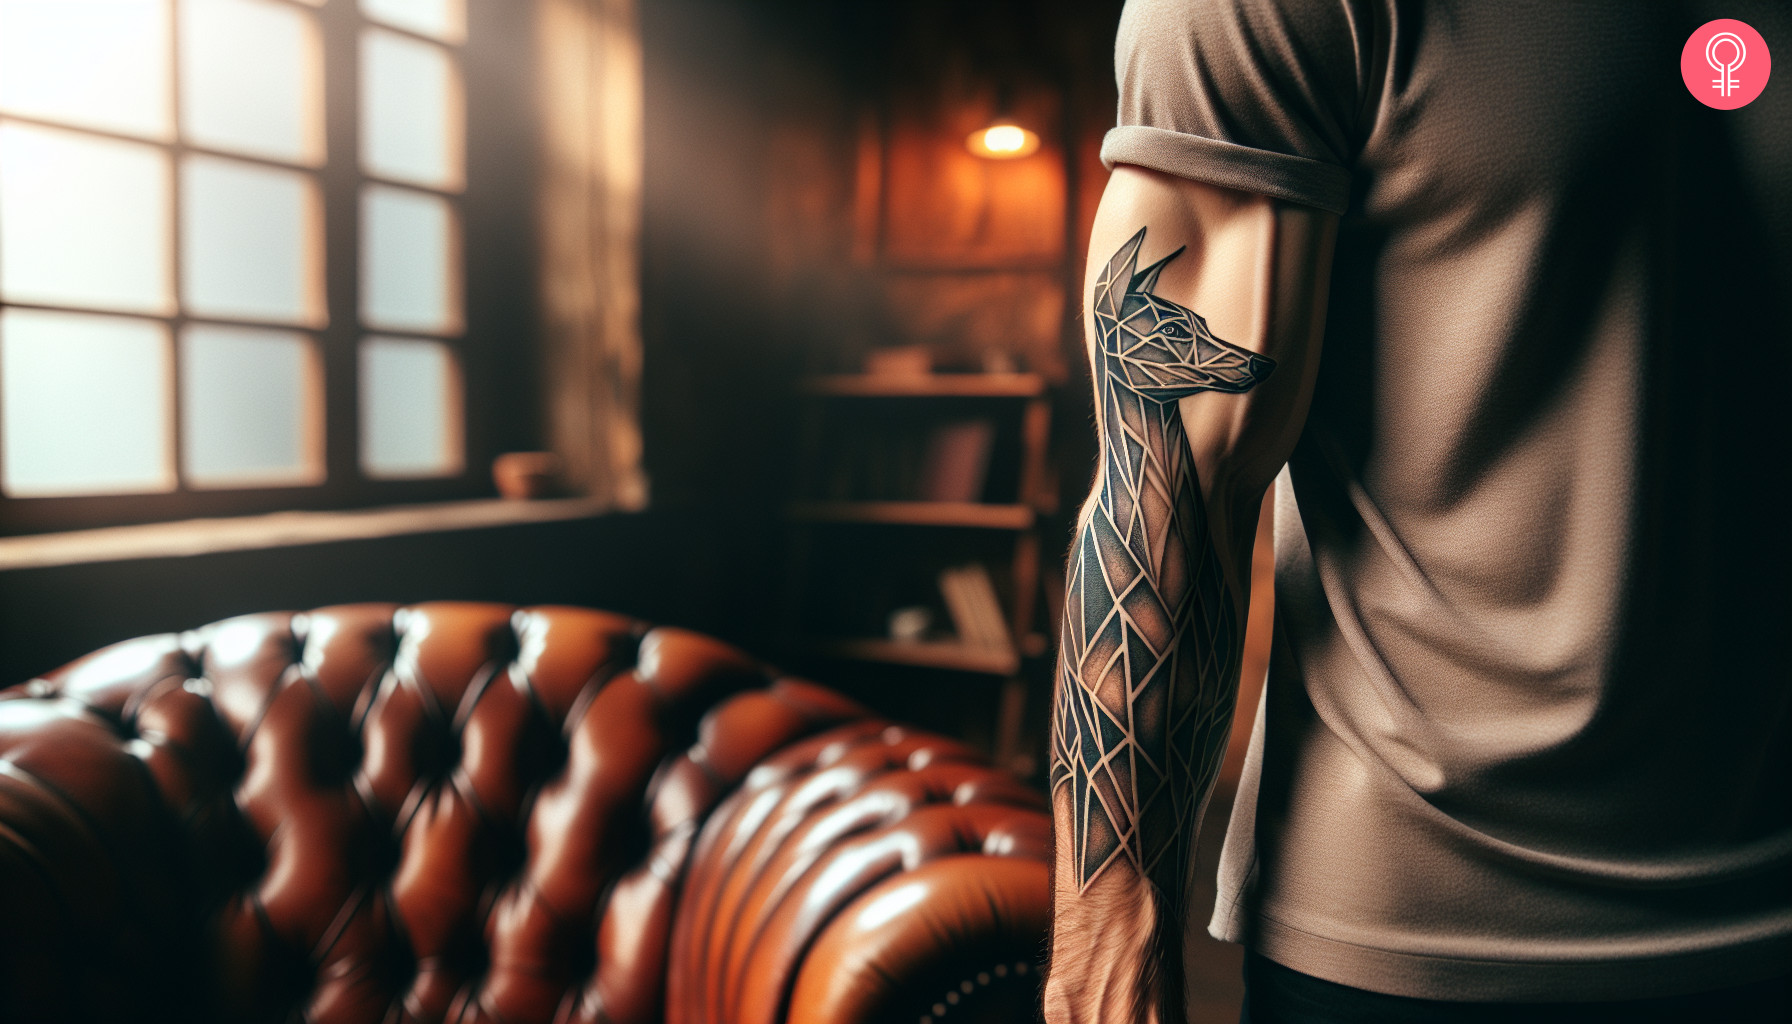 A geometric greyhound tattoo on the lower arm of a man